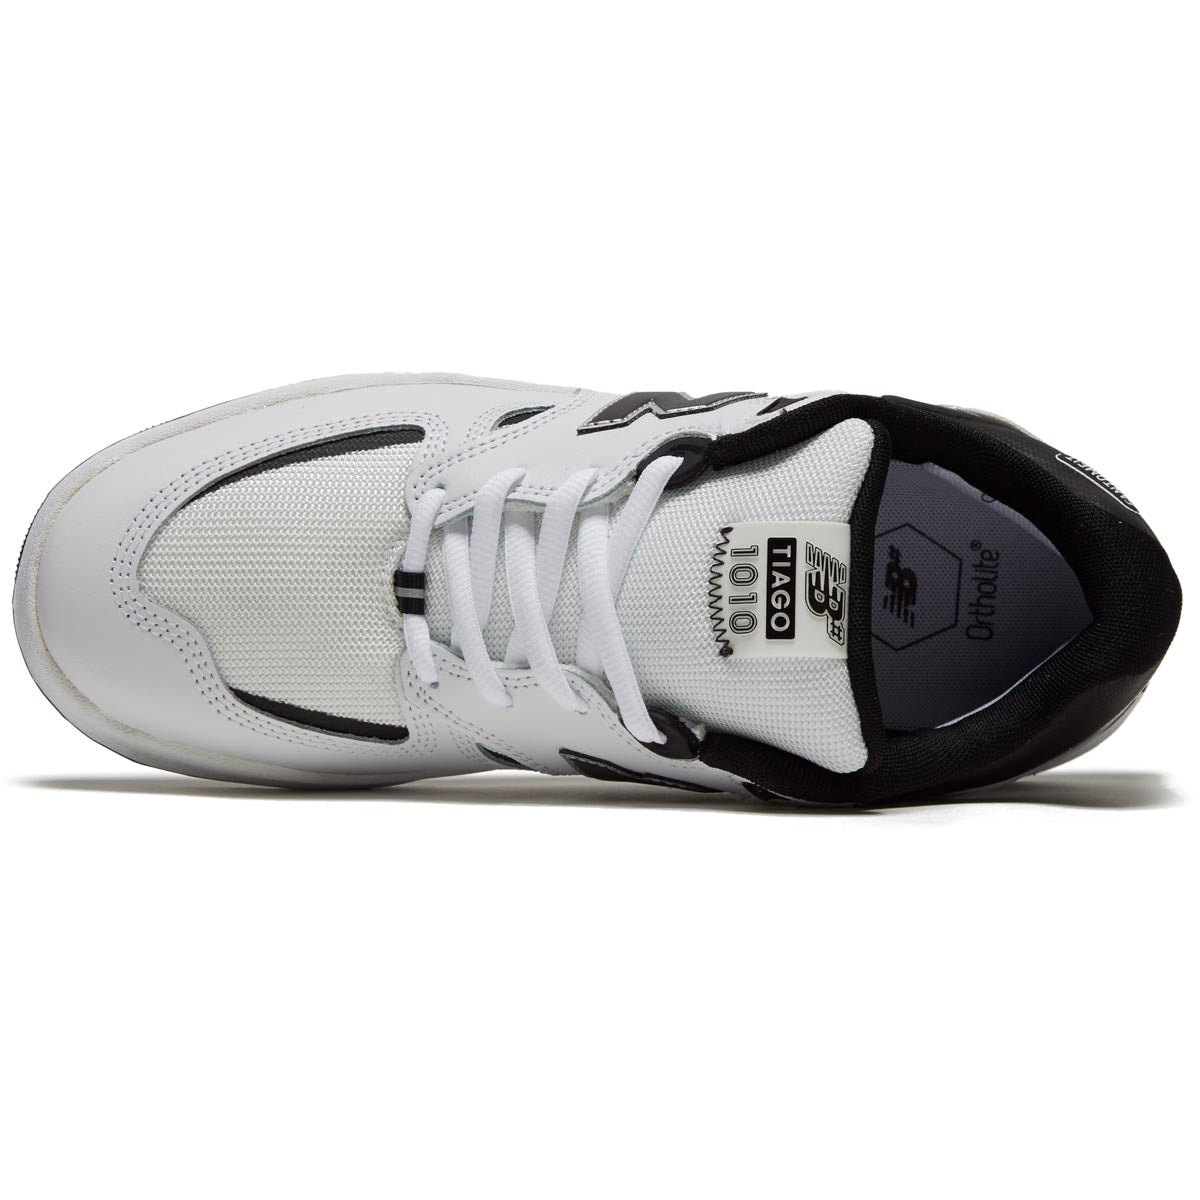 New Balance 1010 Tiago Shoes - White/Black/White image 3